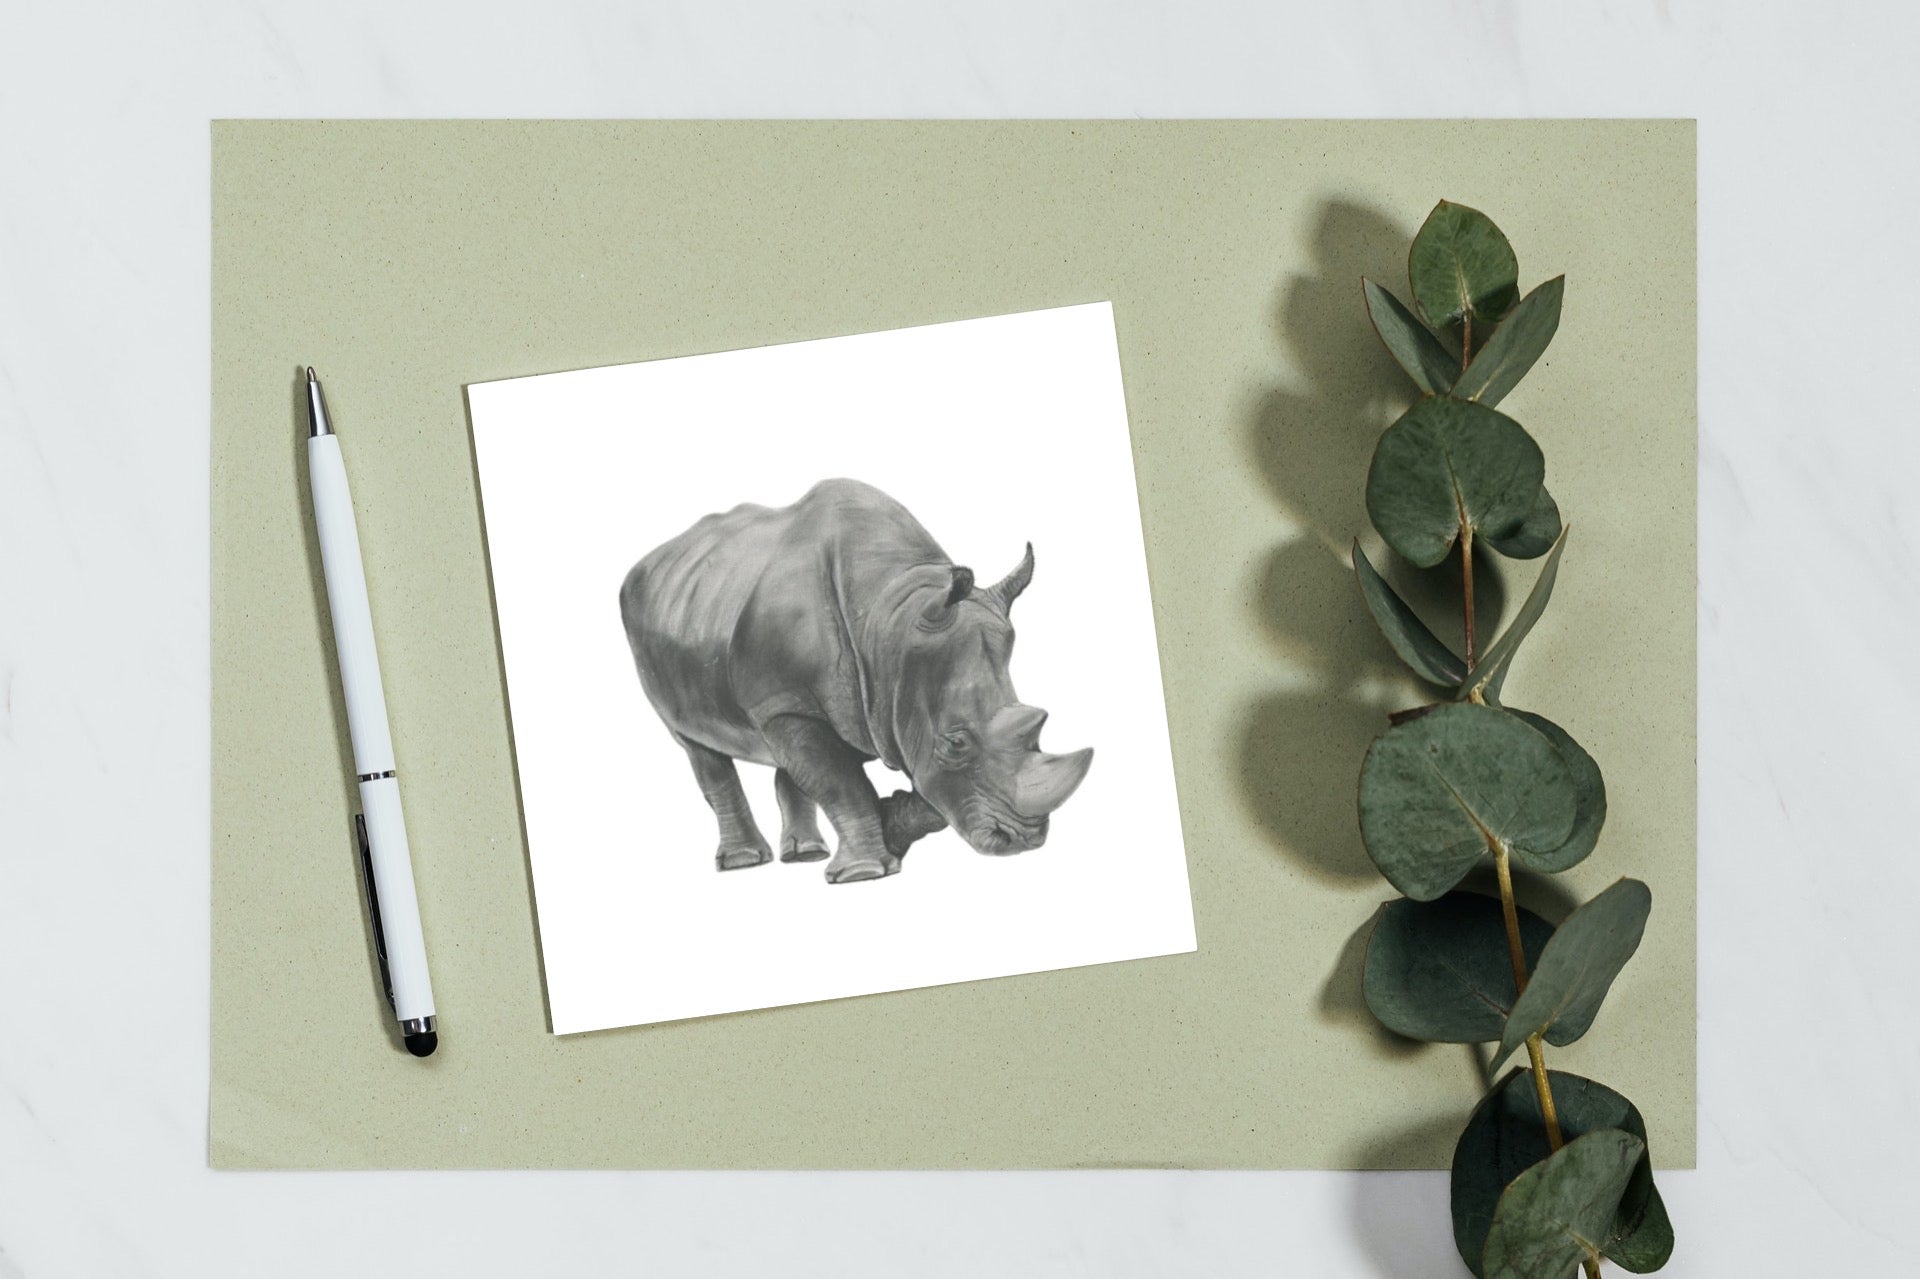 A Hand Drawn Rhino Greeting Card From Libra Fine Arts